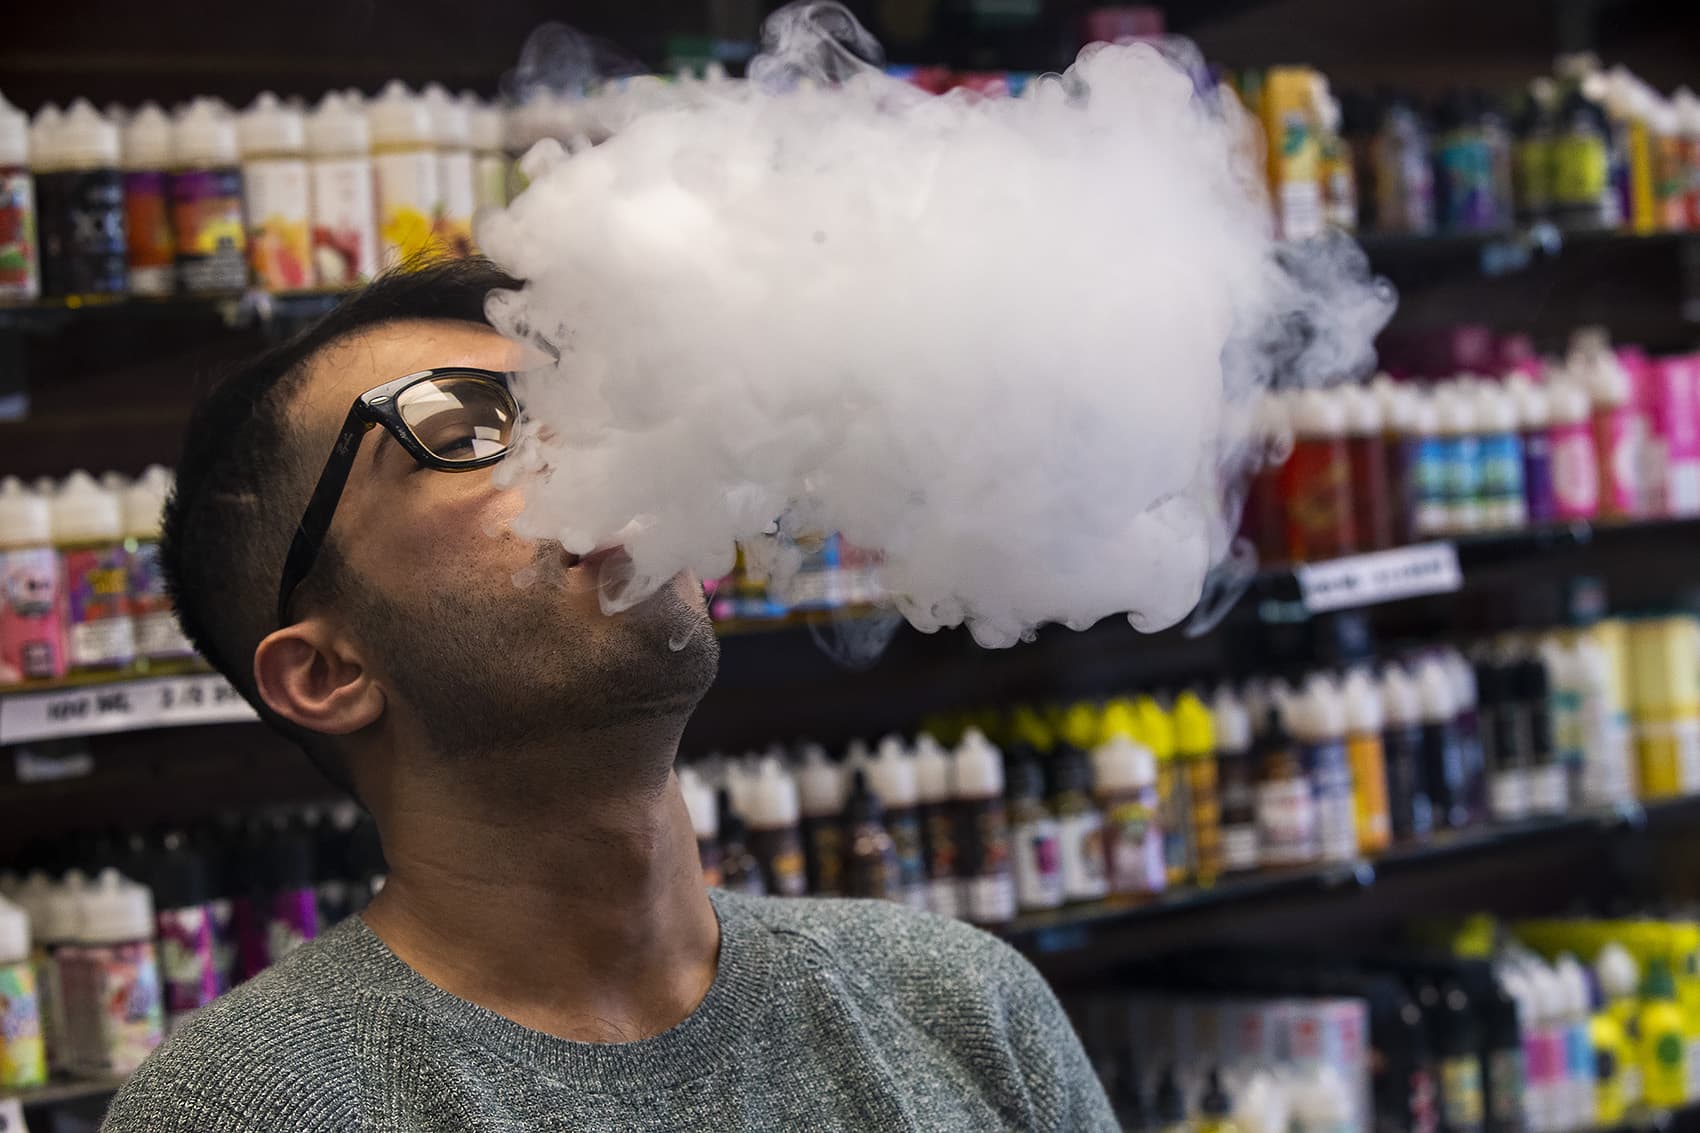 Ali Shaikh, manager of Smoker Choice in Salem, N.H., demonstrates the SMOK Species vaping device. (Jesse Costa/WBUR)